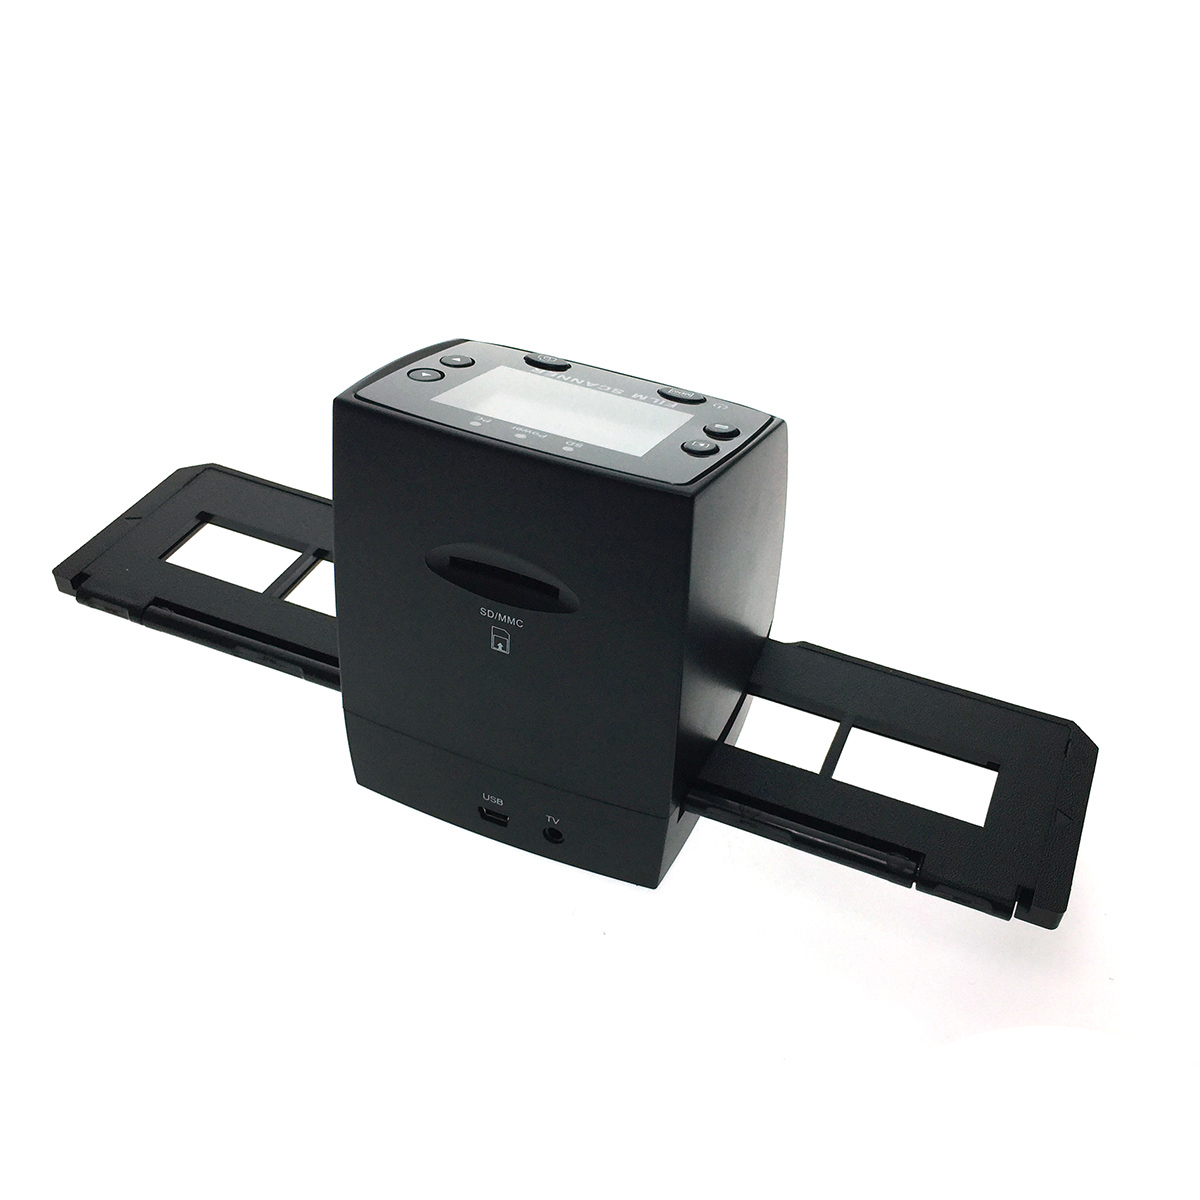 Espada Filmscanner ec717. Сканер Espada Filmscanner ec718 черный. Сканер Espada QPIX MDFC-1400. Espada Filmscanner ec717 купить. Mdfc 1400